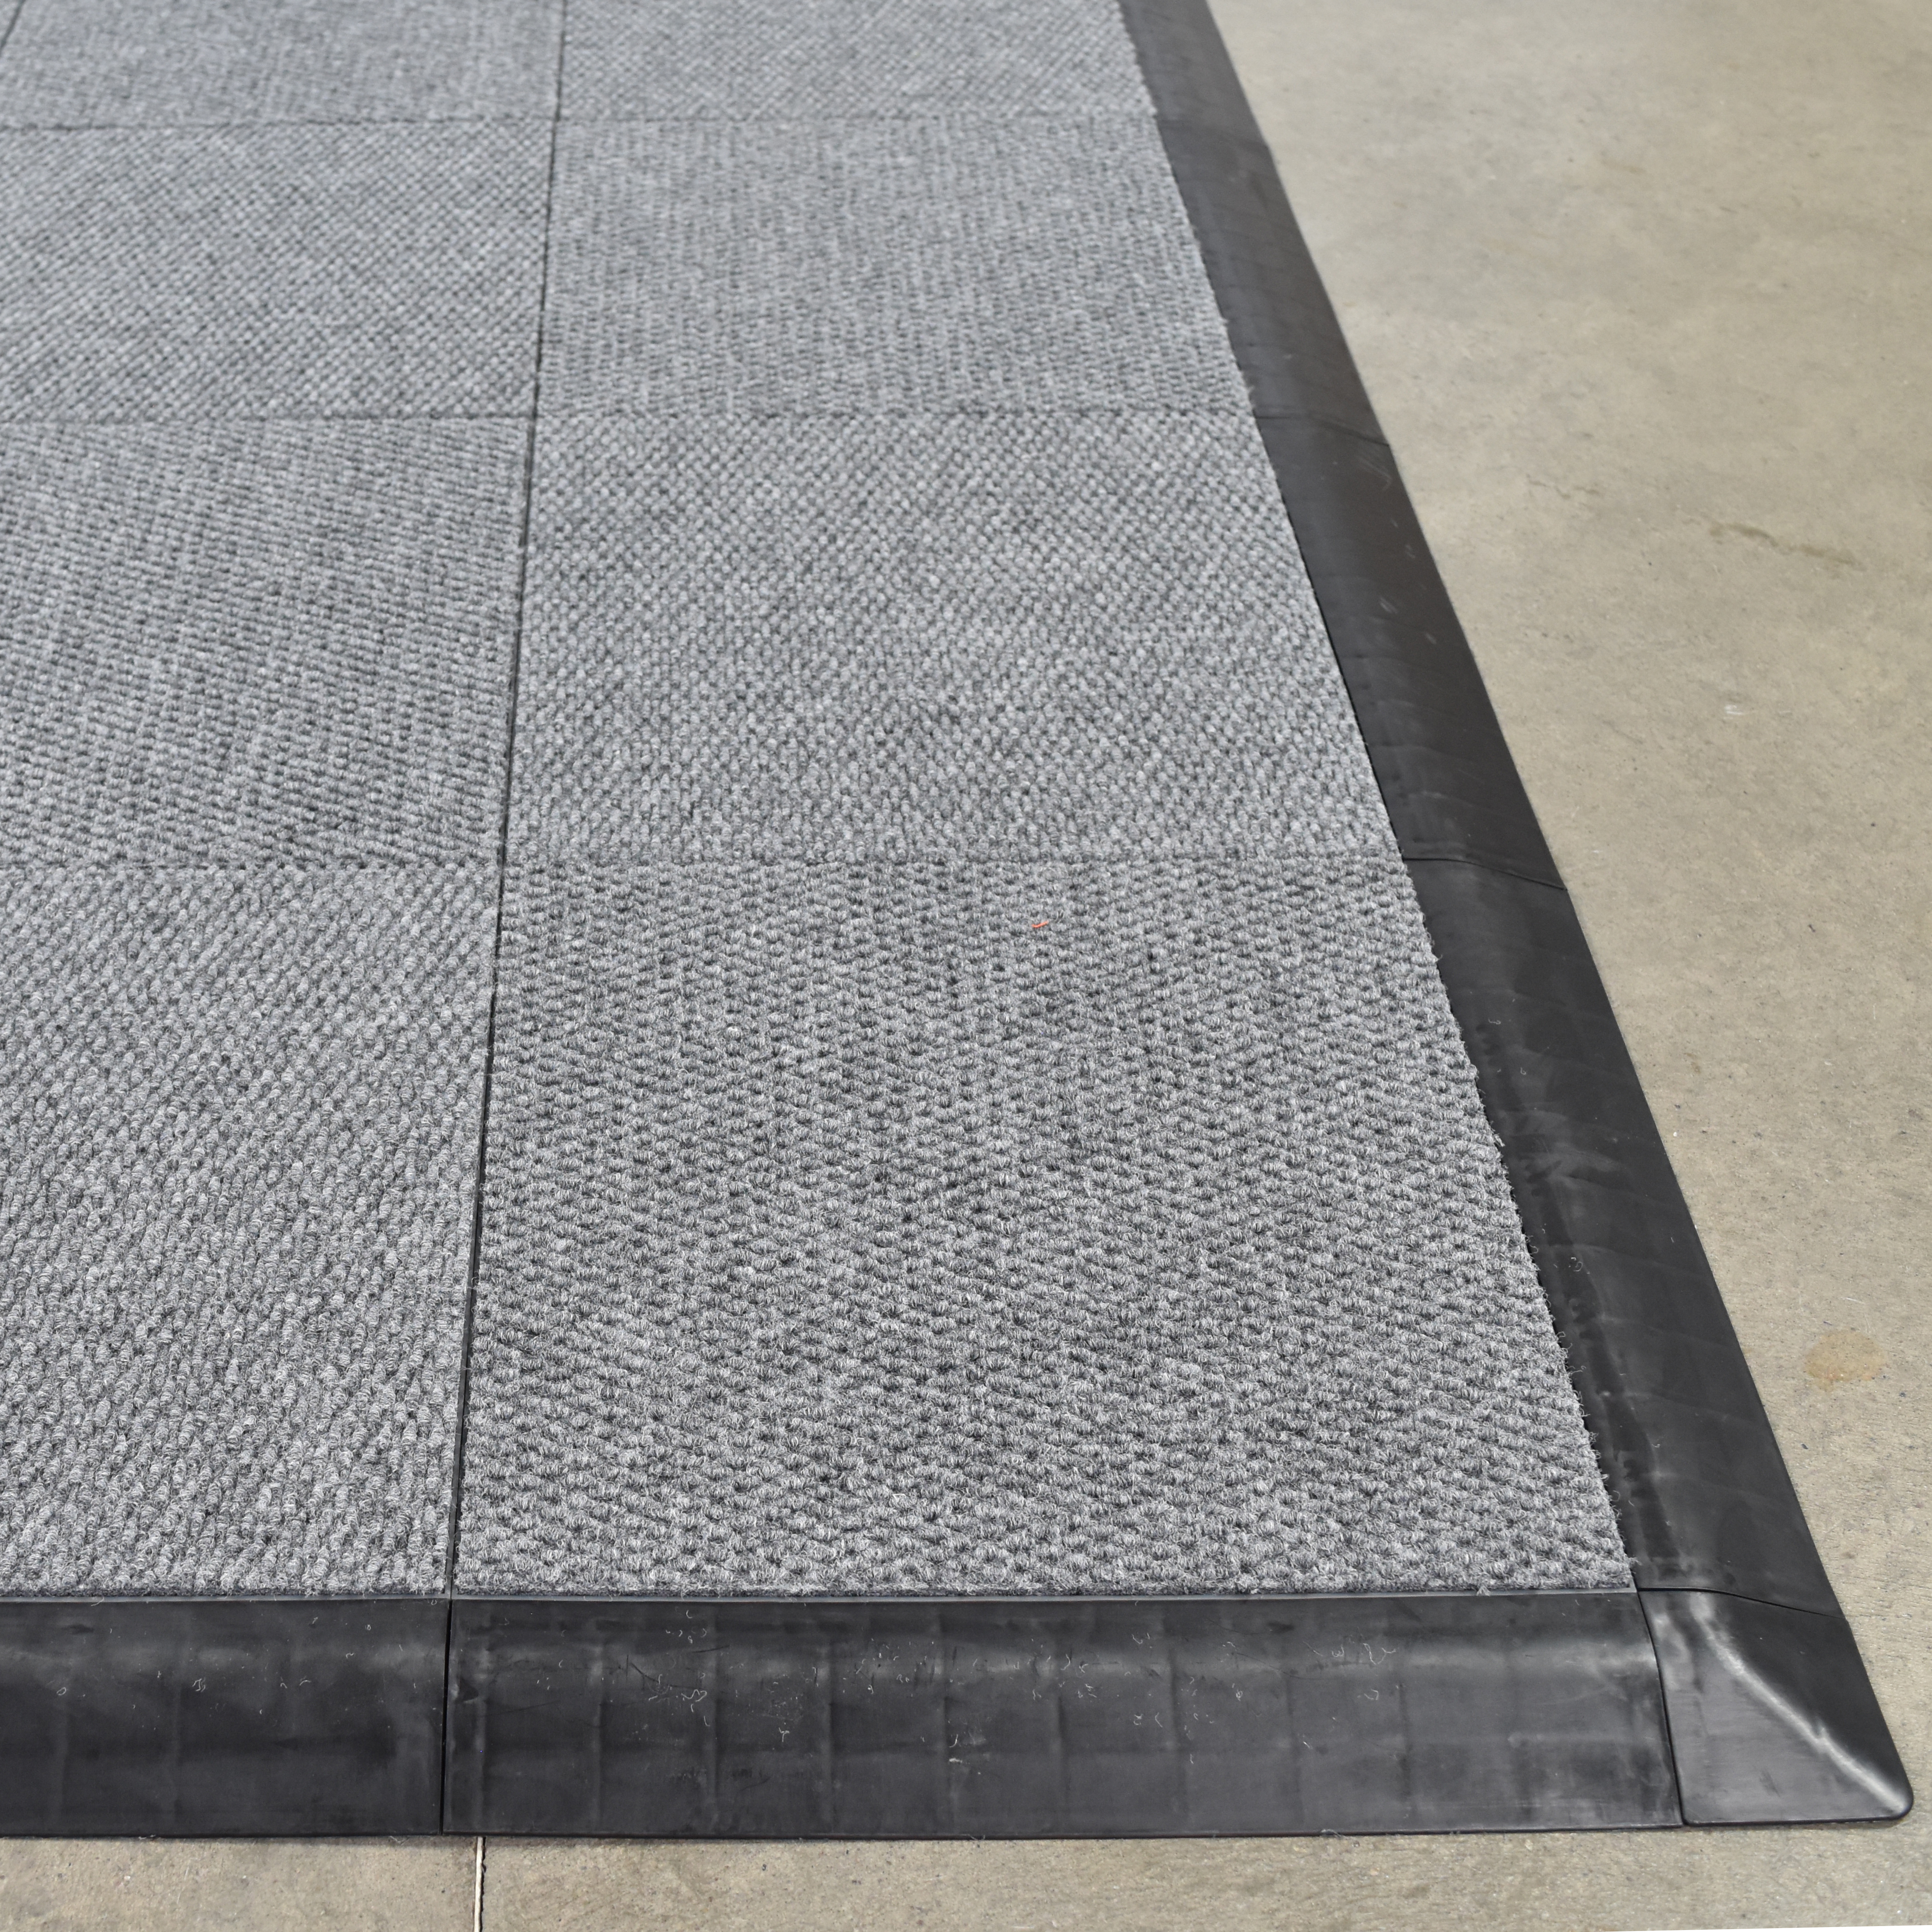 Carpet Square Modular Trade Show Tiles 10x10 Ft. Kit gray corner with borders